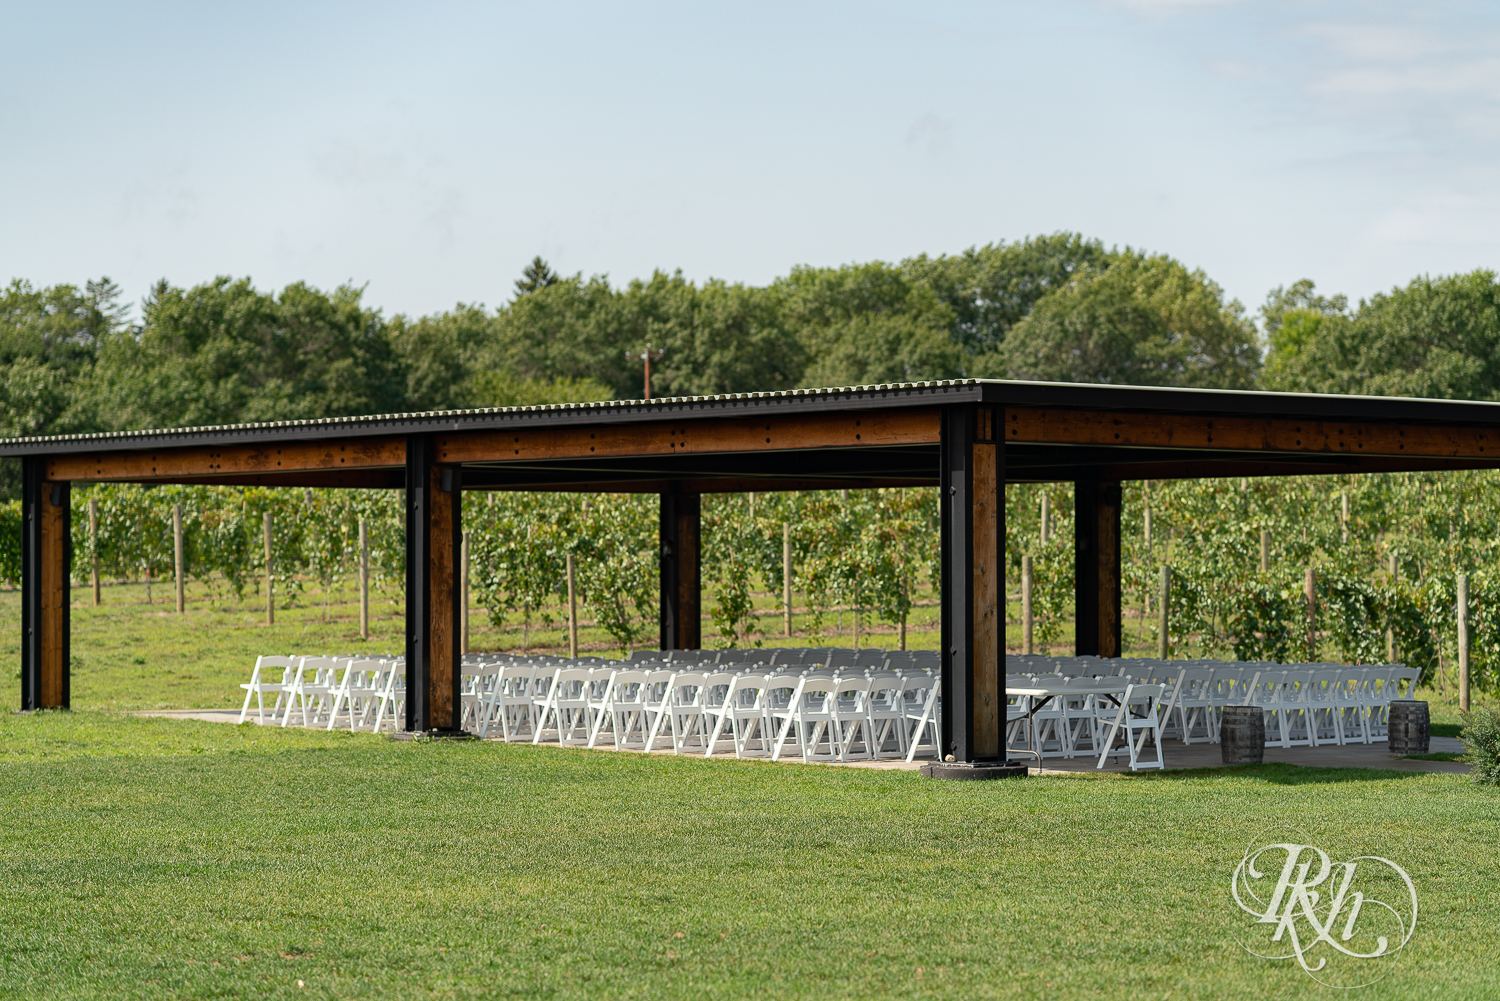 Outdoor summer wedding ceremony setup at 7 Vines Vineyard in Dellwood, Minnesota.